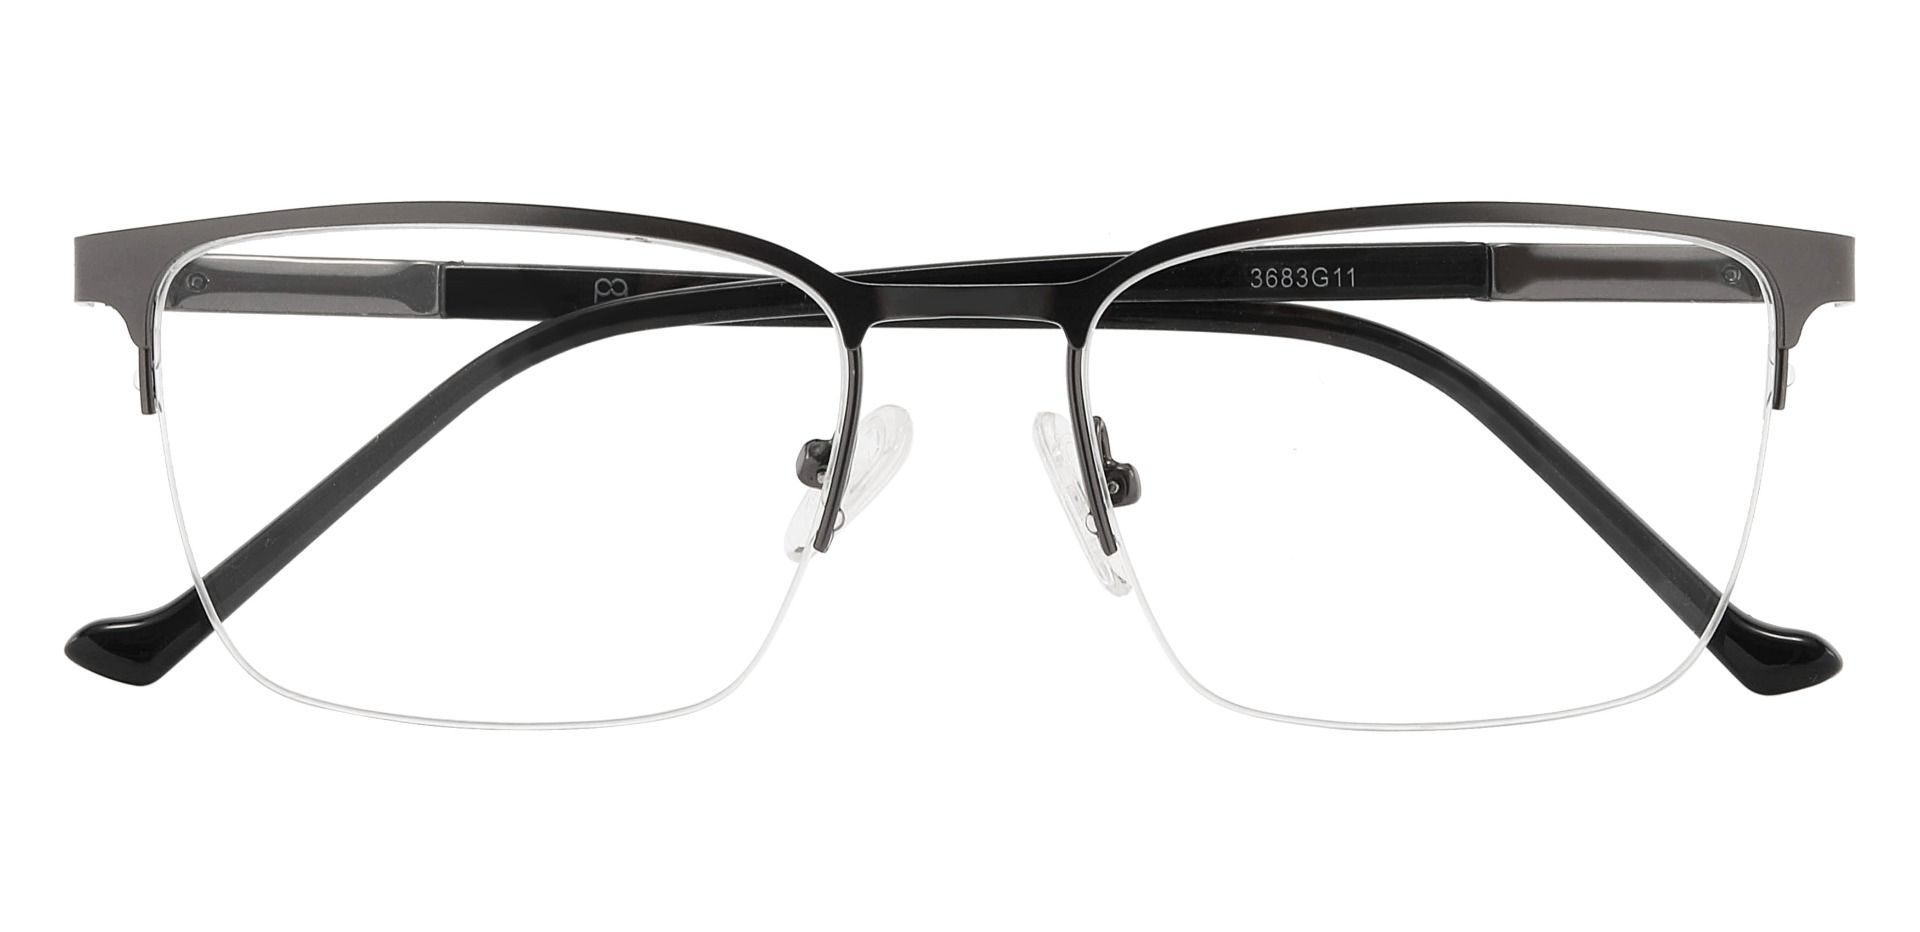 Ludlow Rectangle Progressive Glasses - Gray